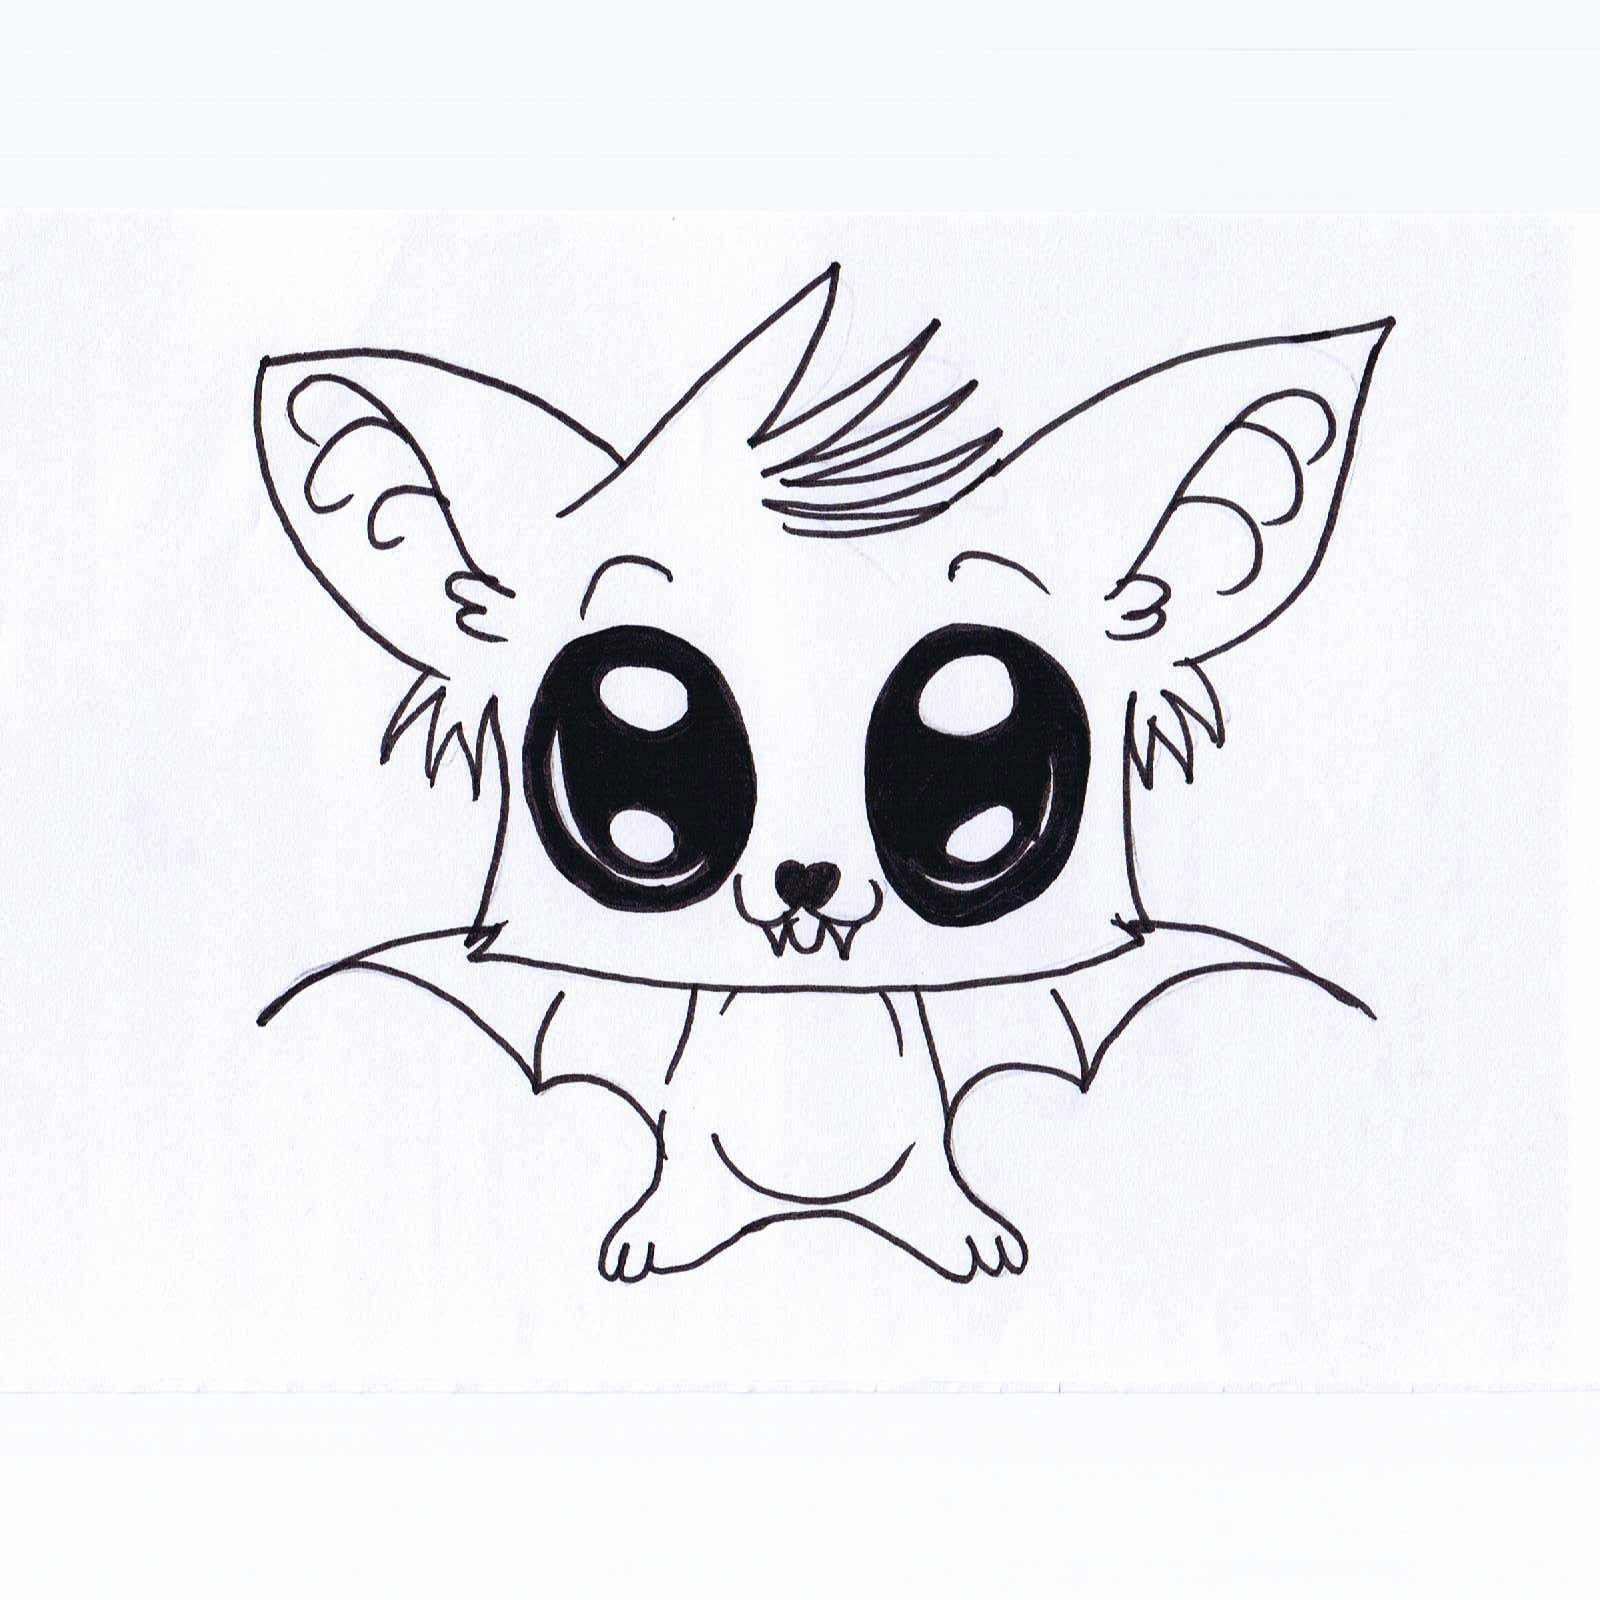 Free Cute Animal Drawings, Download Free Cute Animal Drawings png image, Free ClipArts on Clipart Library